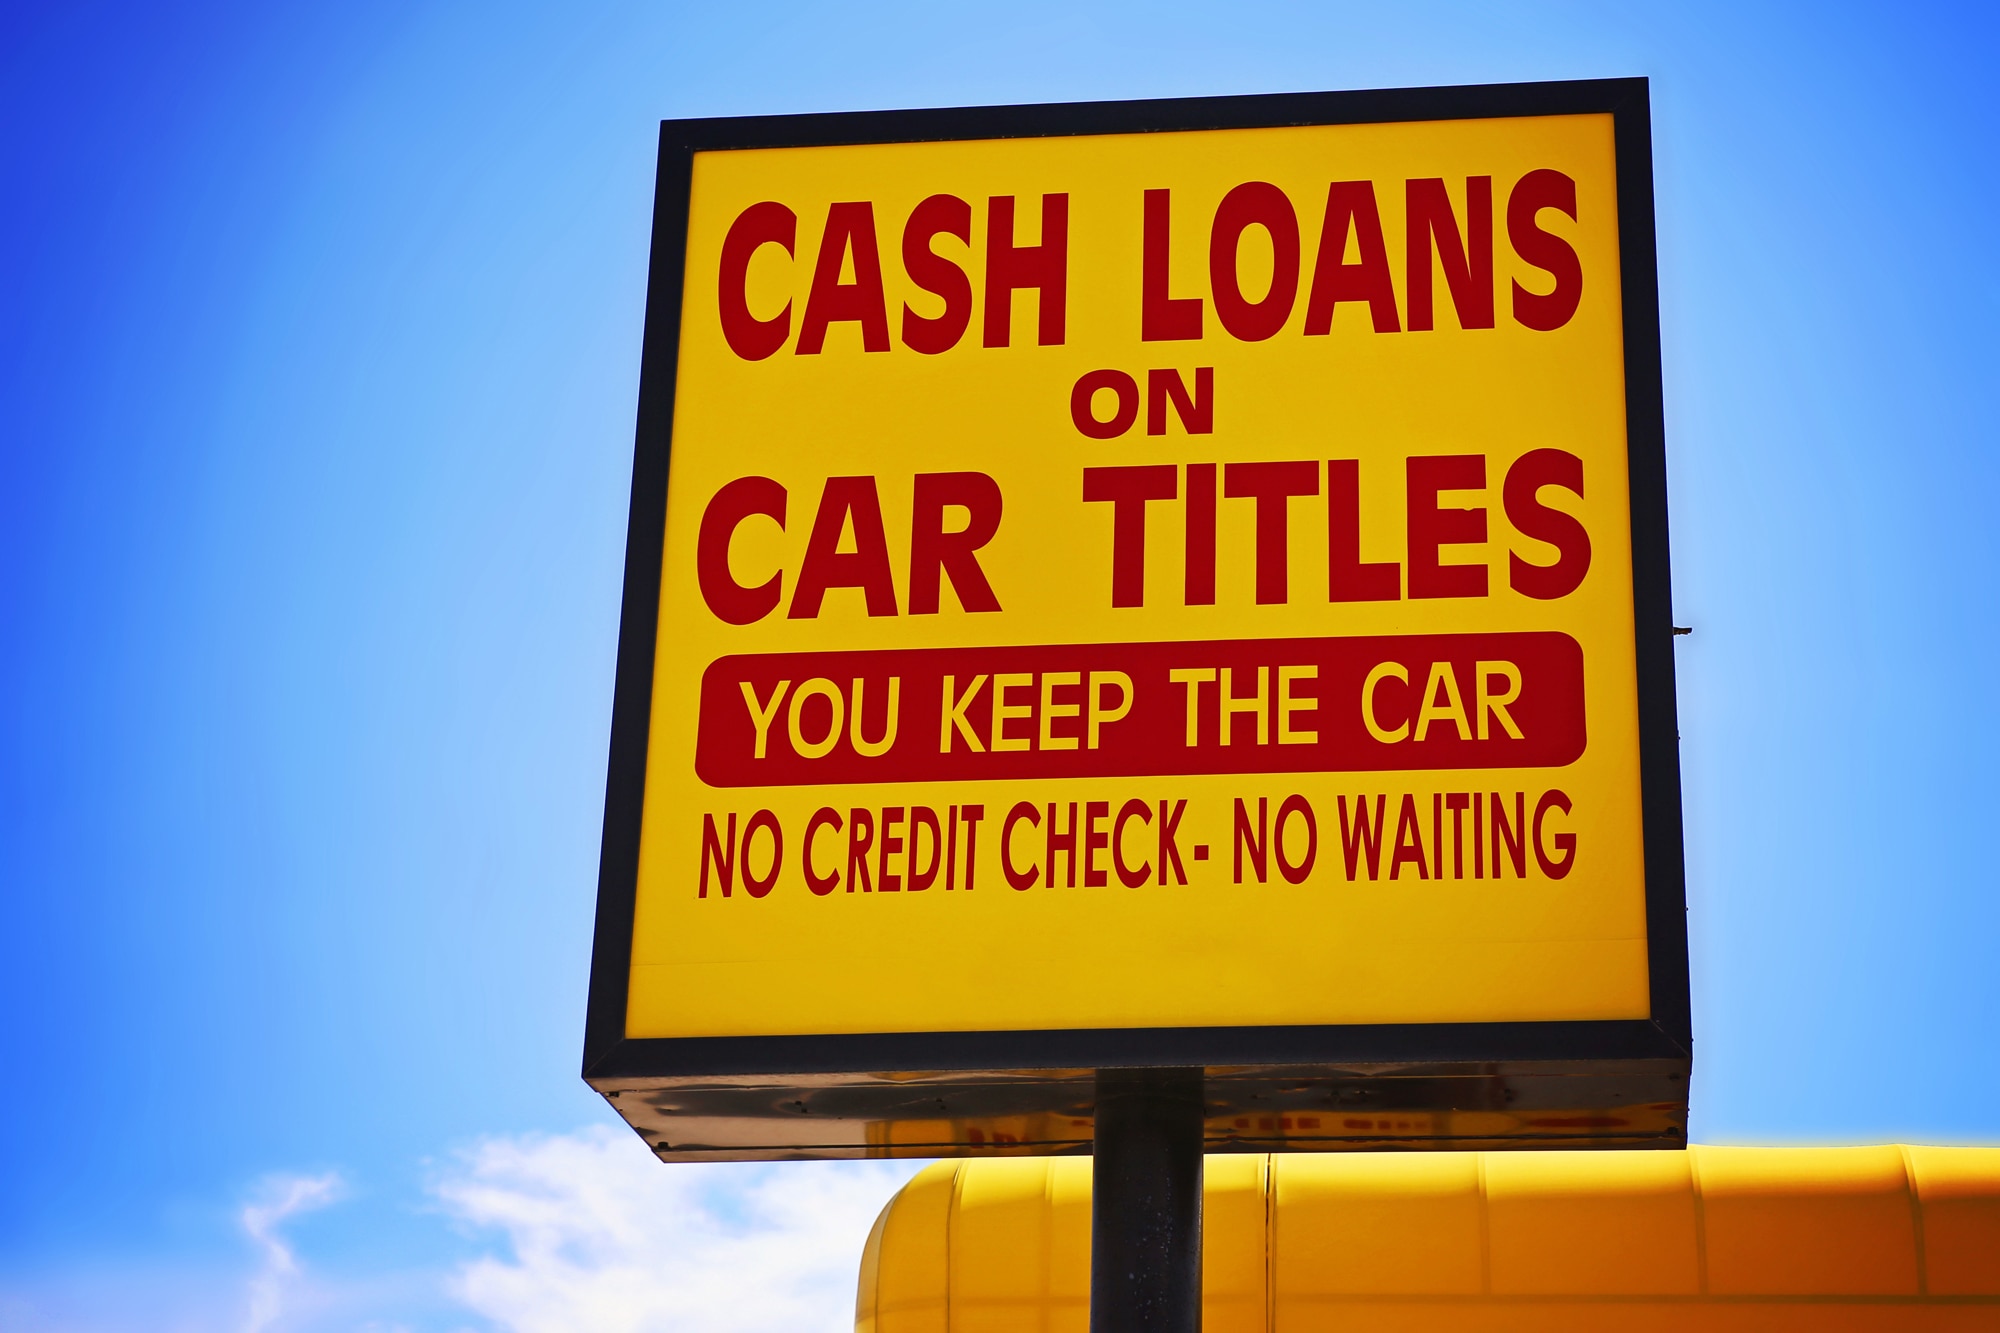 Cash loan on car title sign